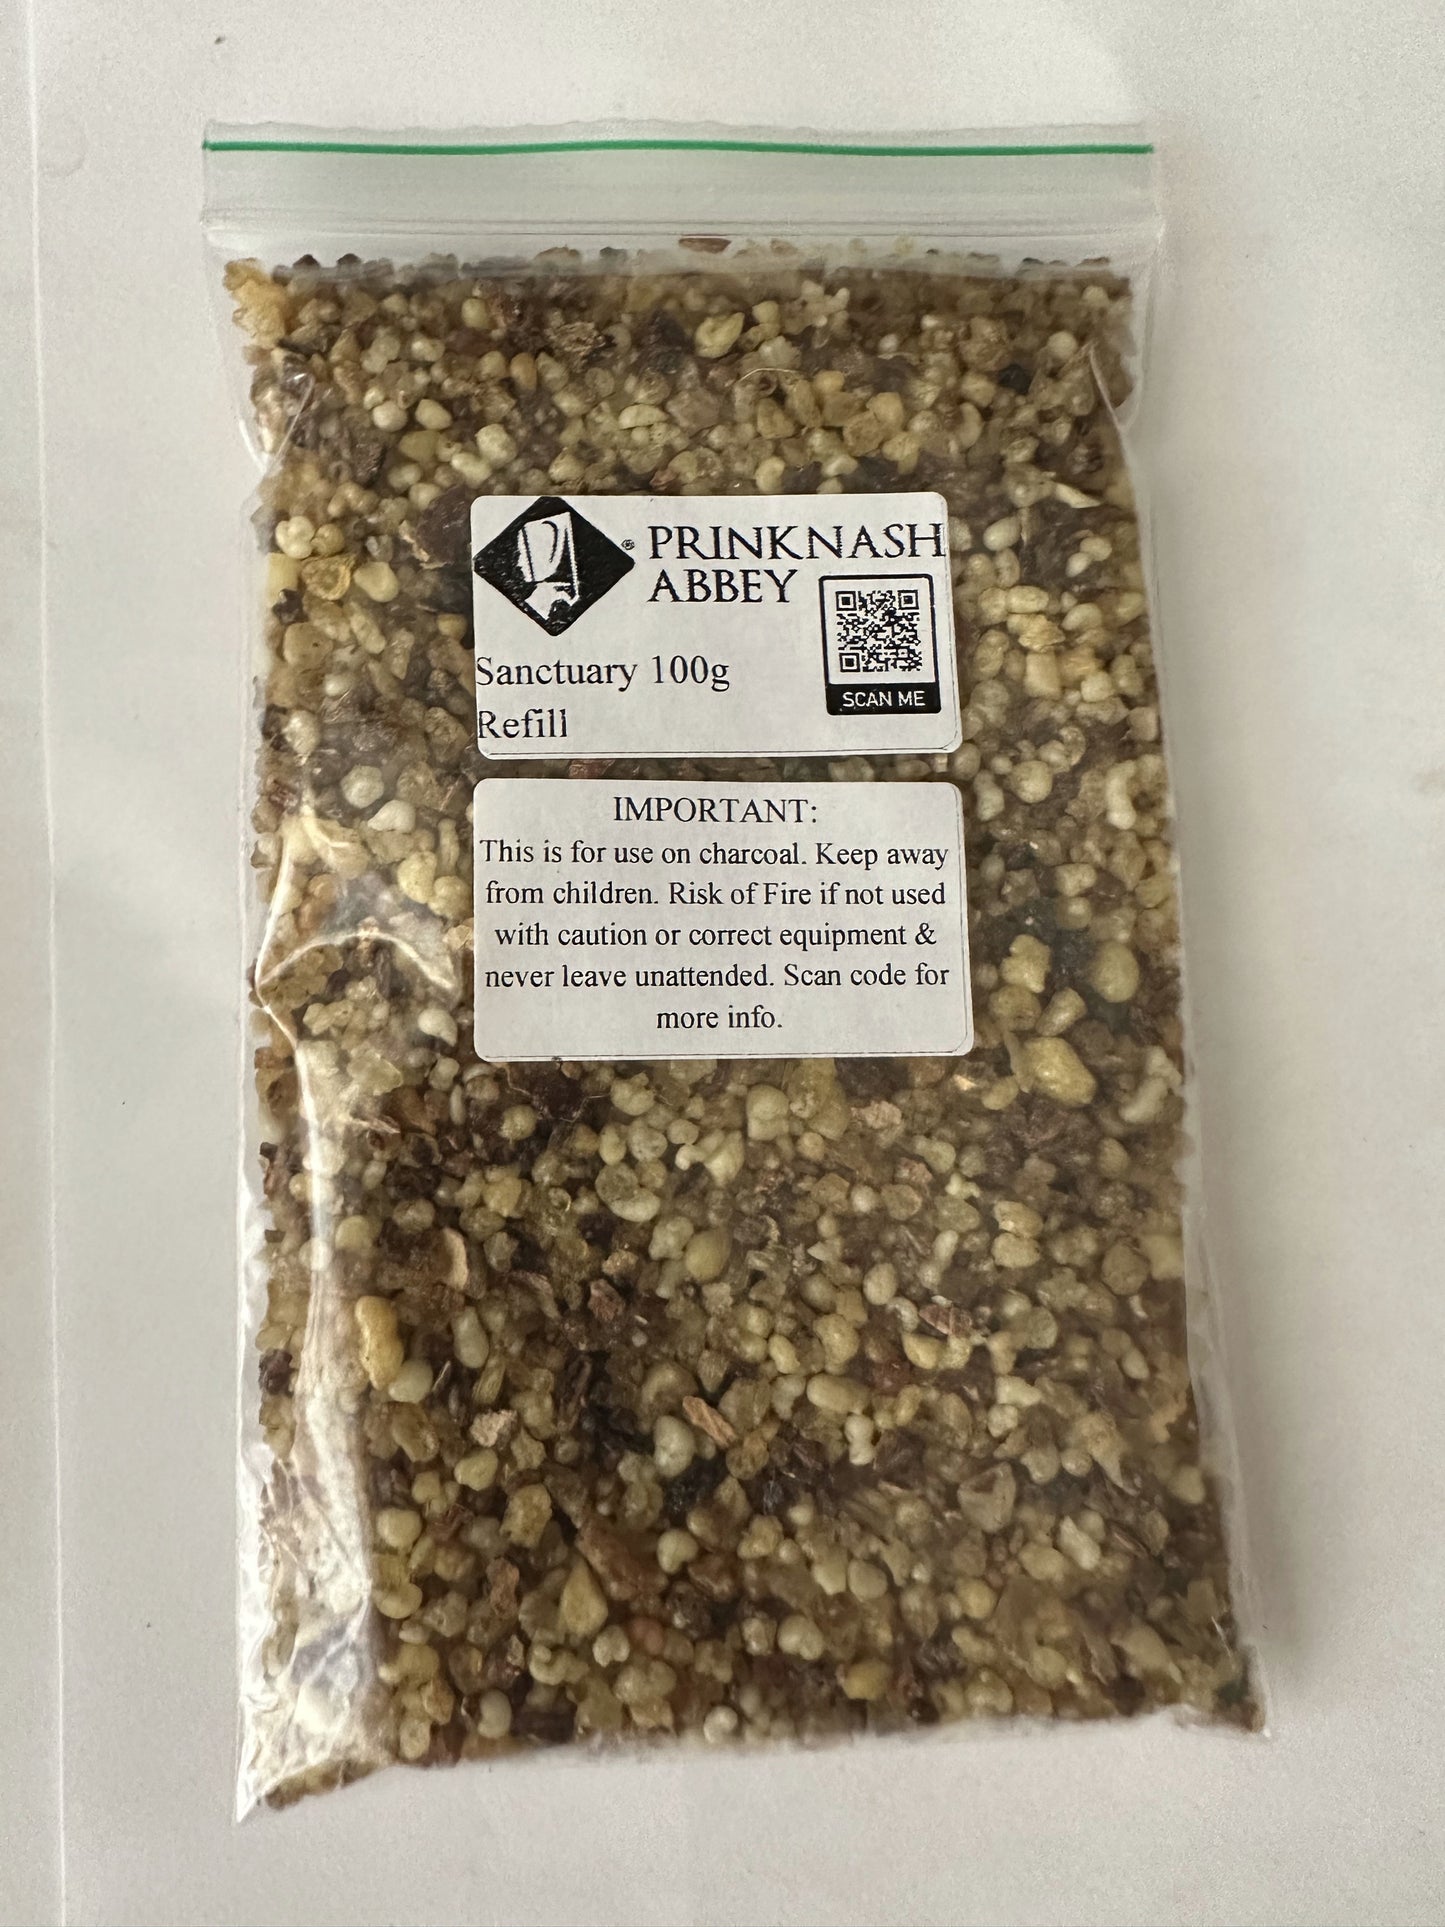 Prinknash Abbey Sanctuary Blend 100g Refill Bag Incense Resin